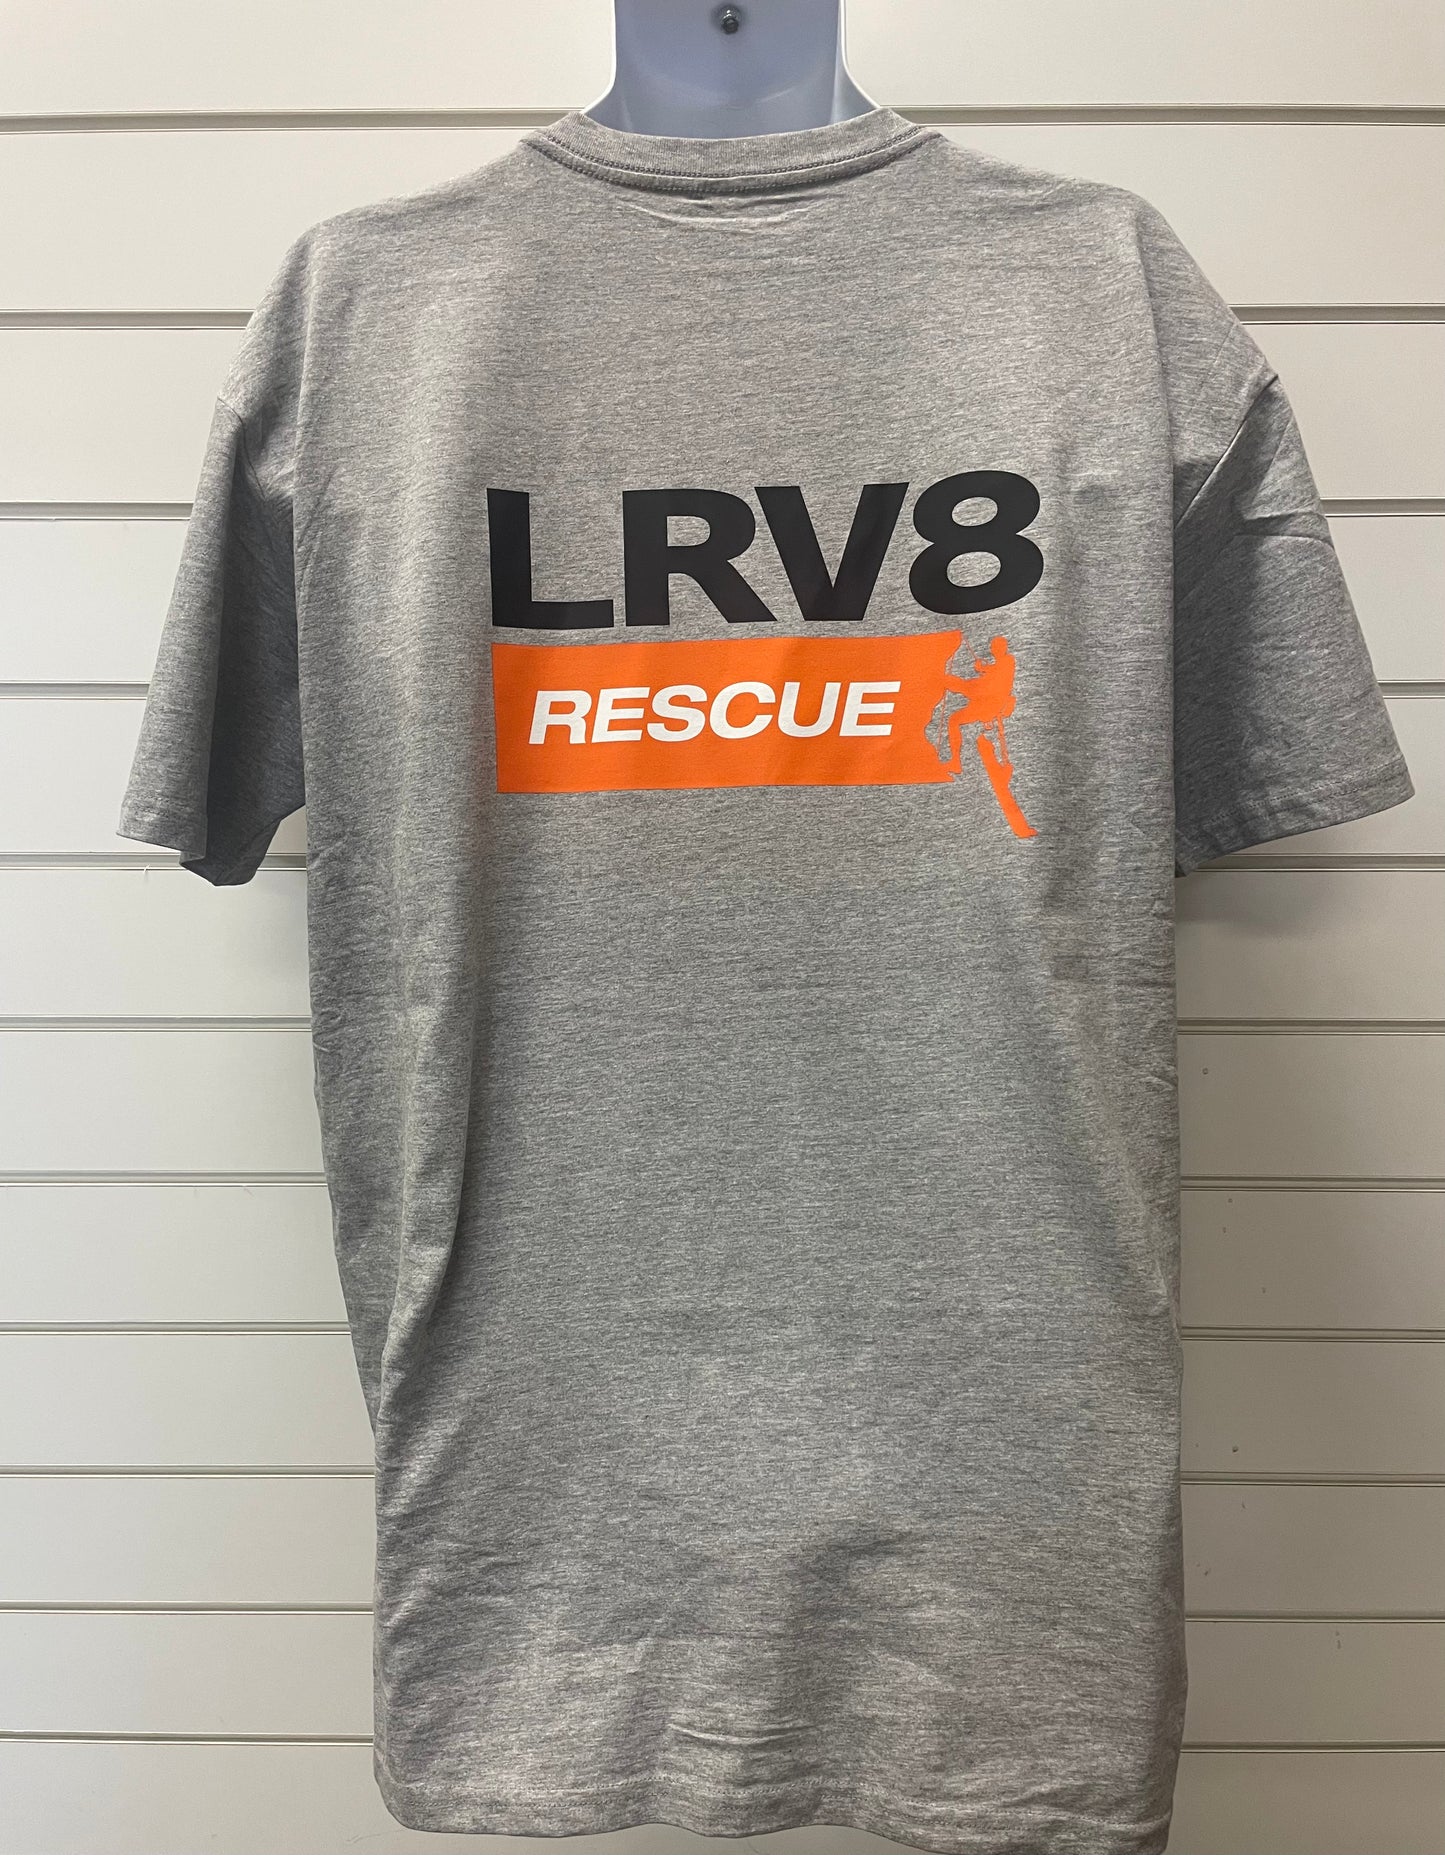 LRV8 T-Shirt.